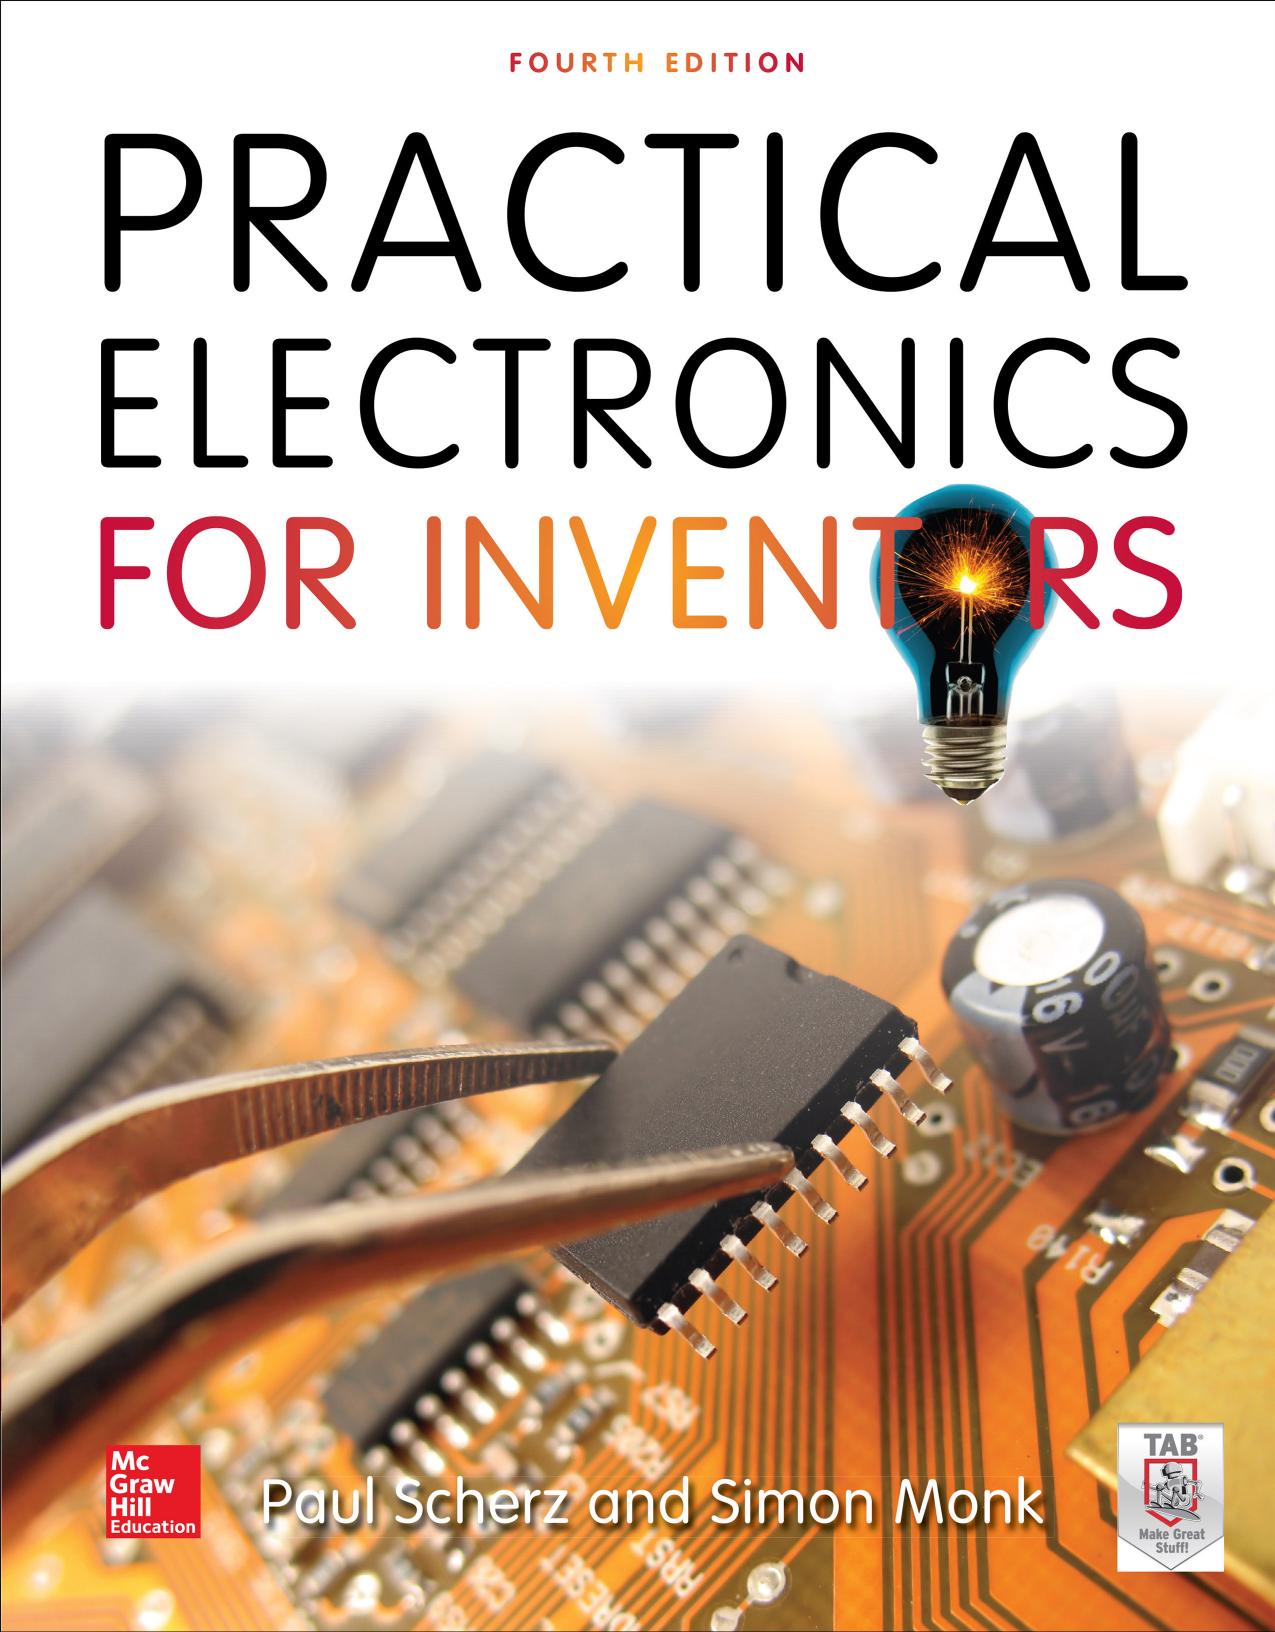 Practical Electronics for Inventors by Paul Scherz